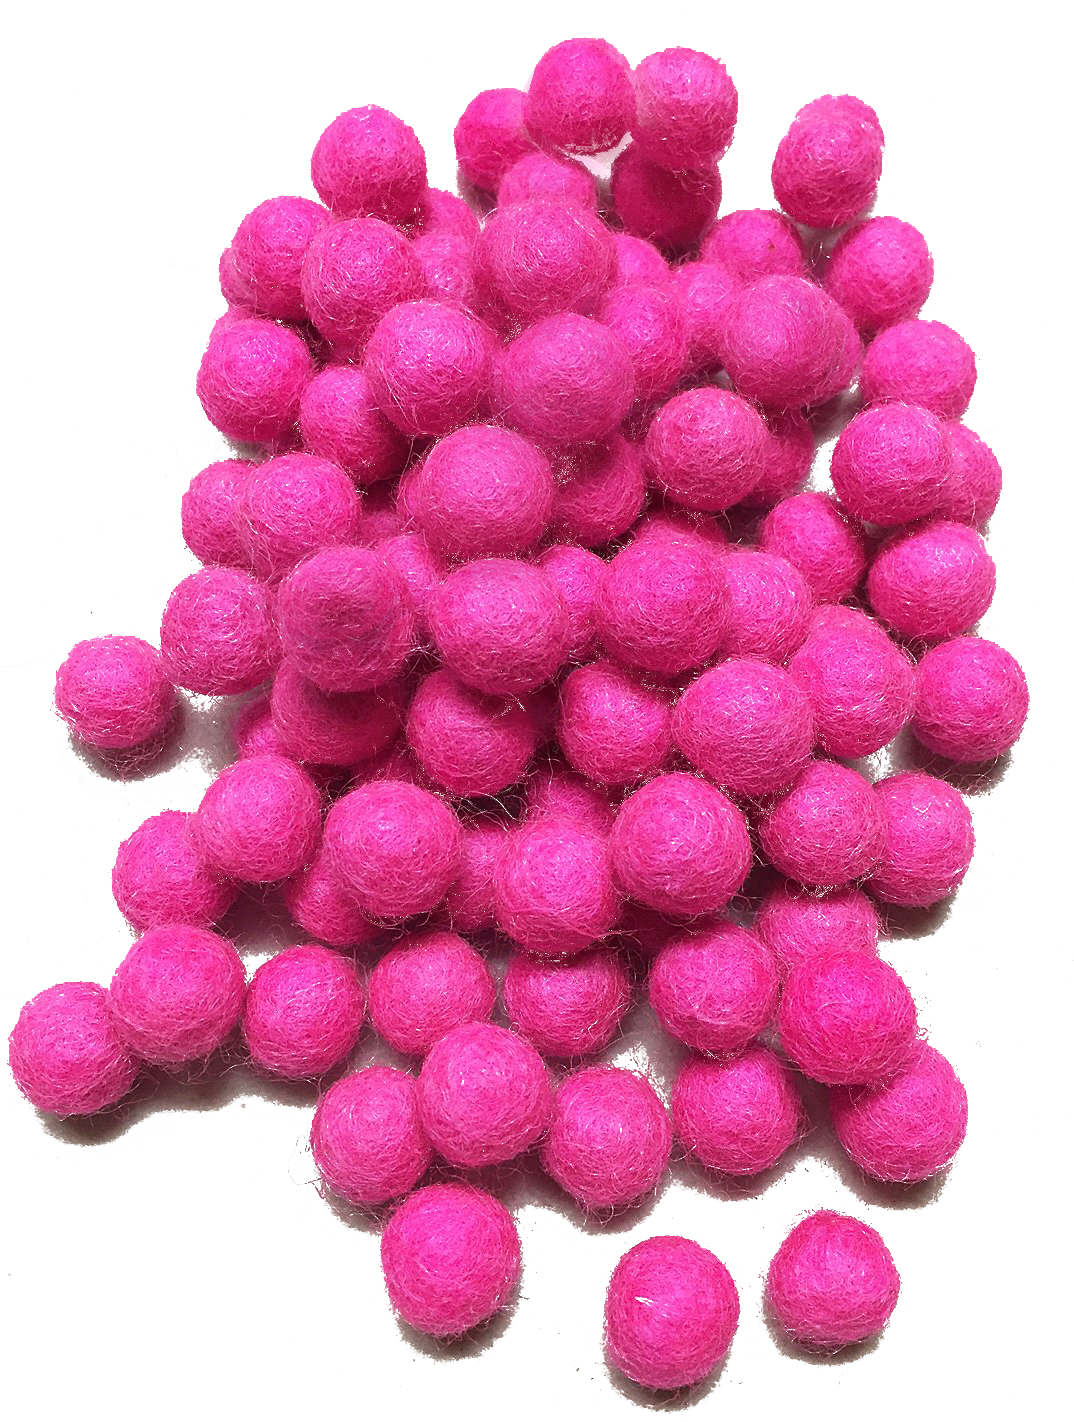 Yarn Place Felt Balls - 100 Pure Wool Beads 20mm Hot Pink P3